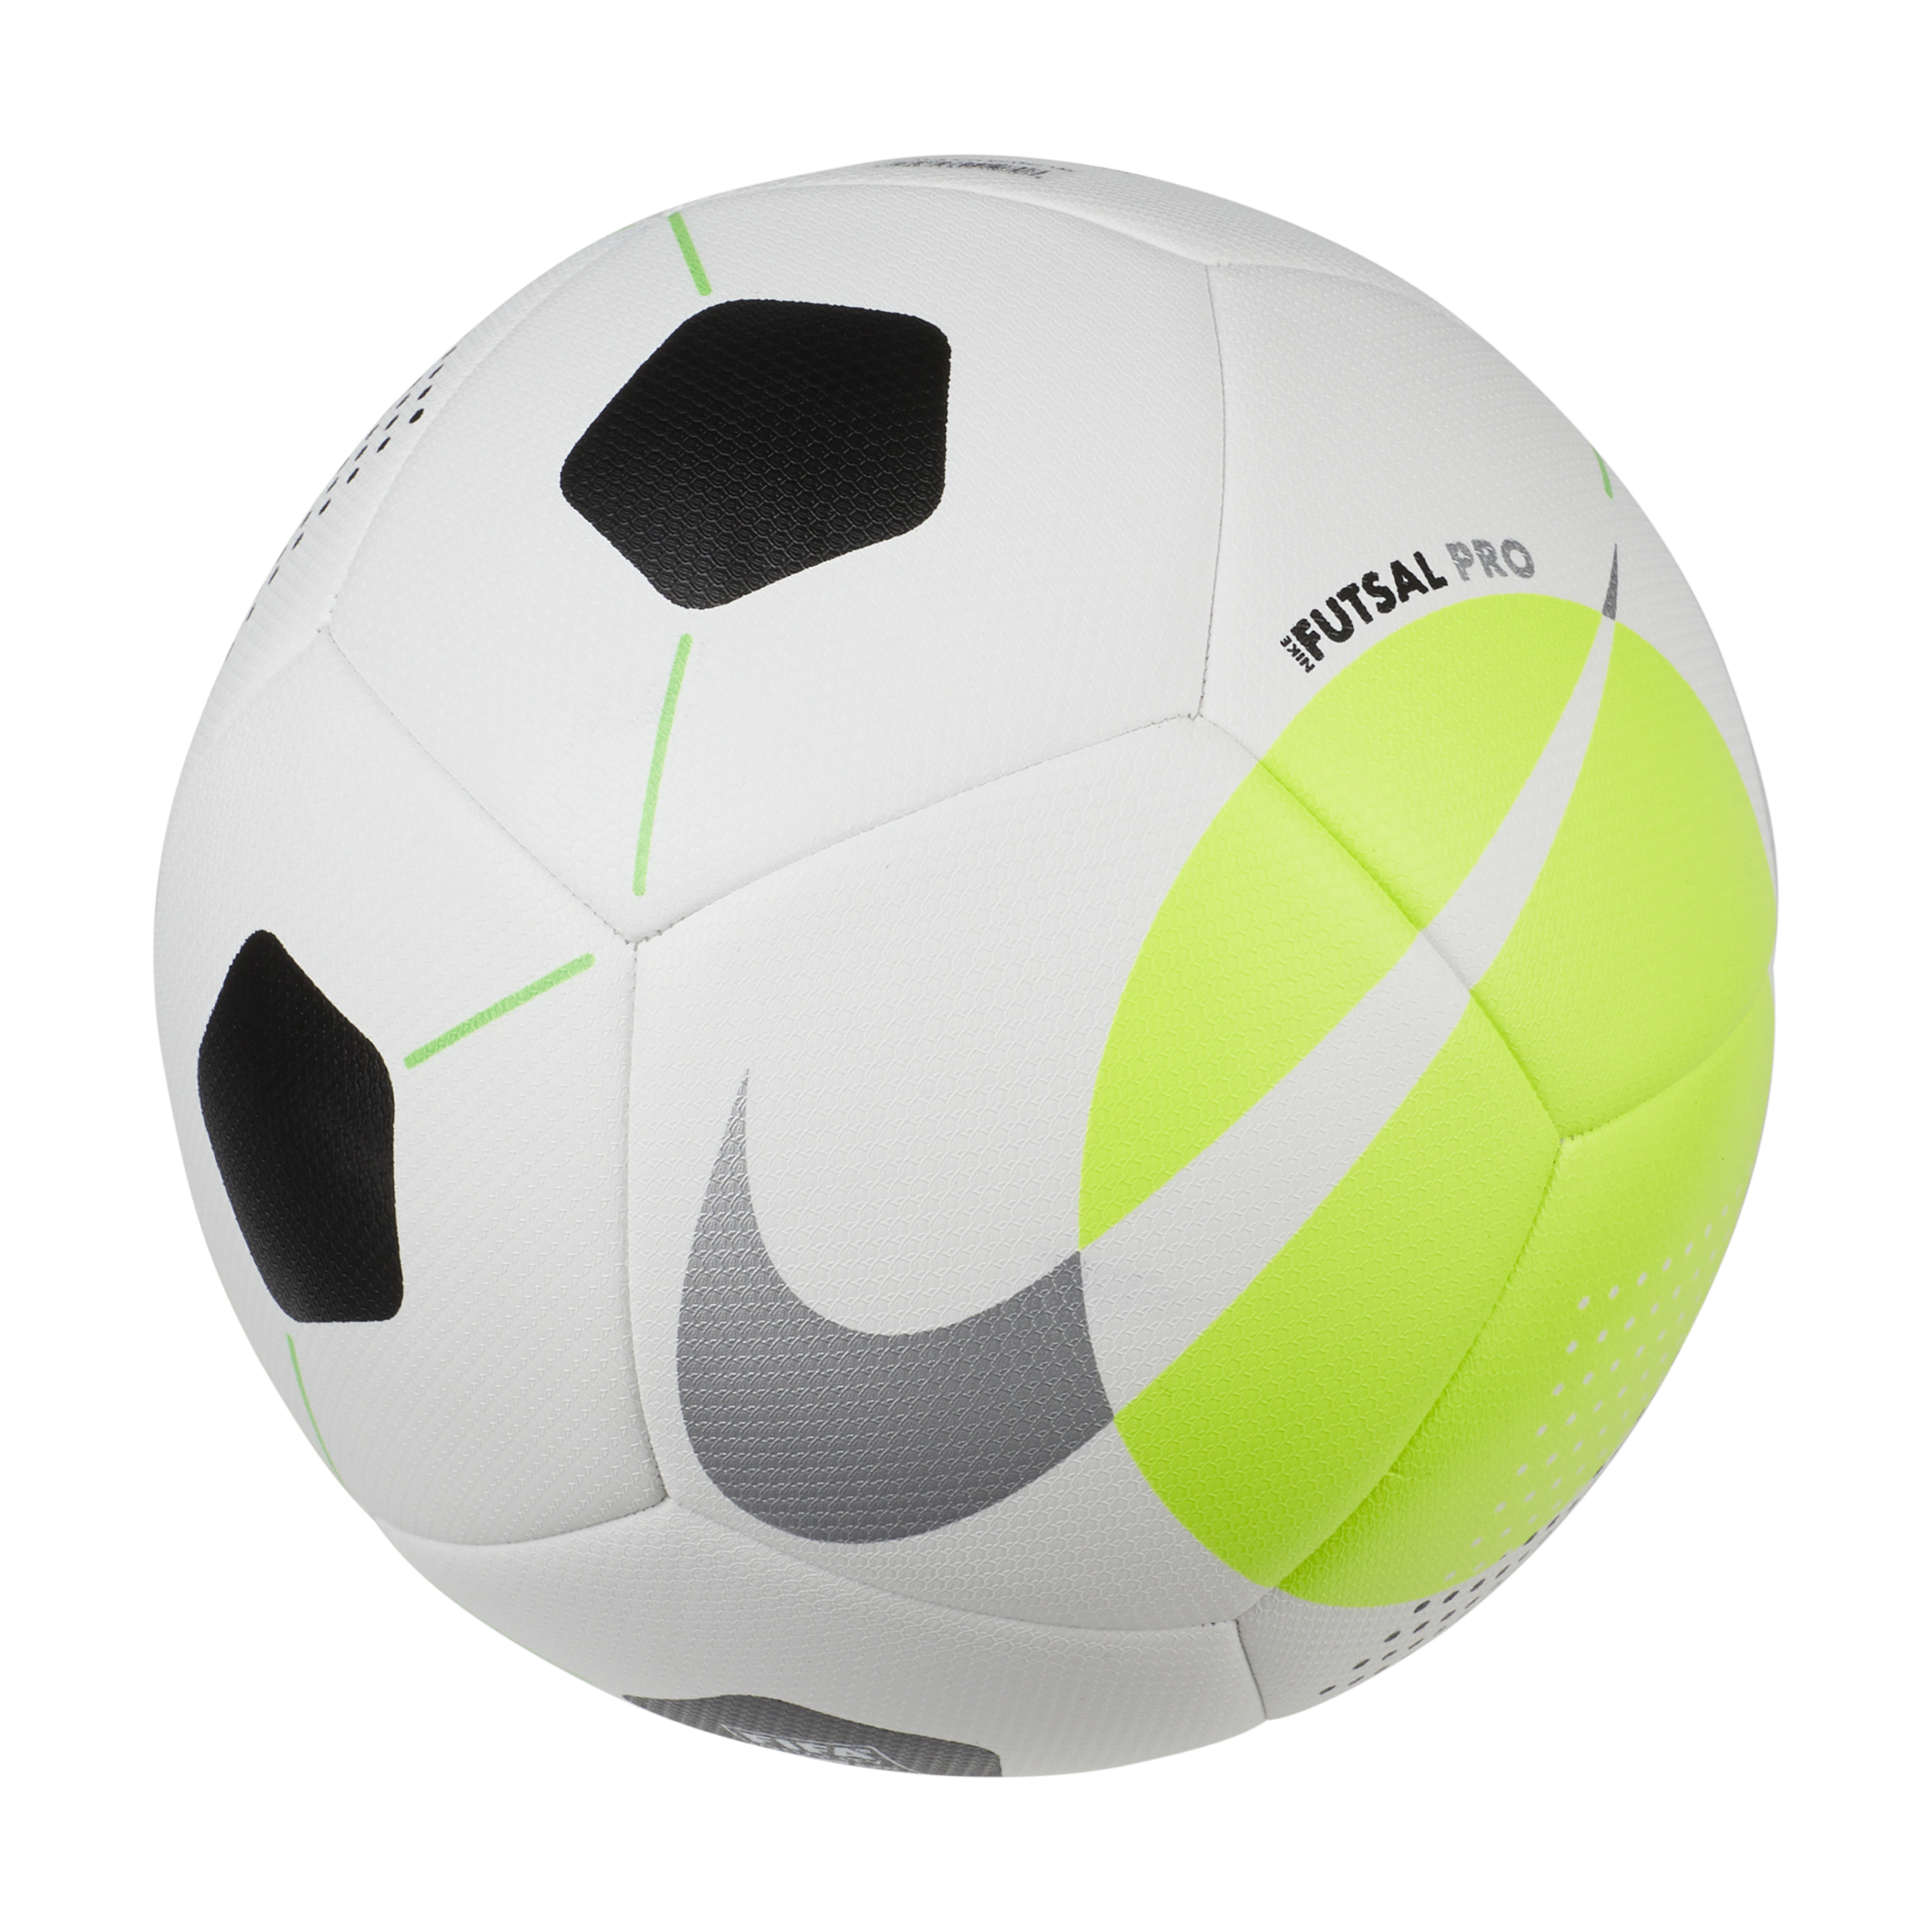 Pallone da calcio Nike Futsal Pro - Bianco